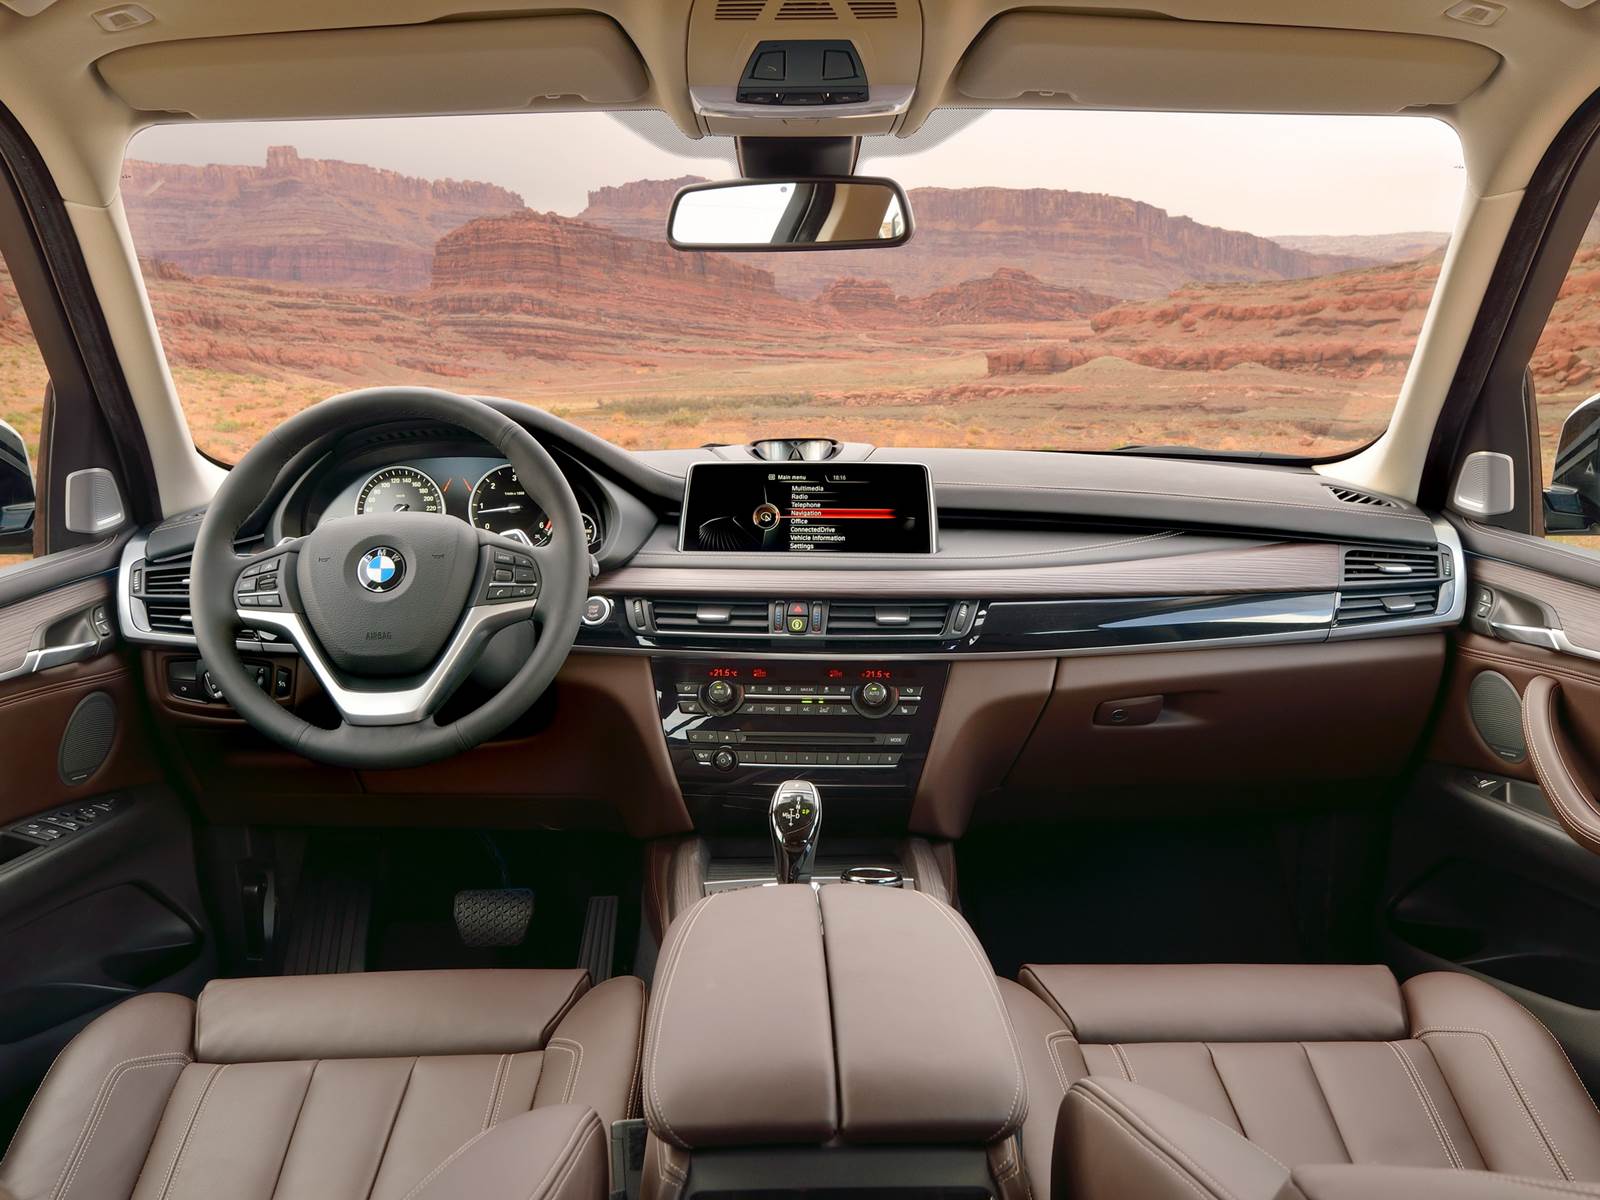 BMW xDrive30d 2015 - interior